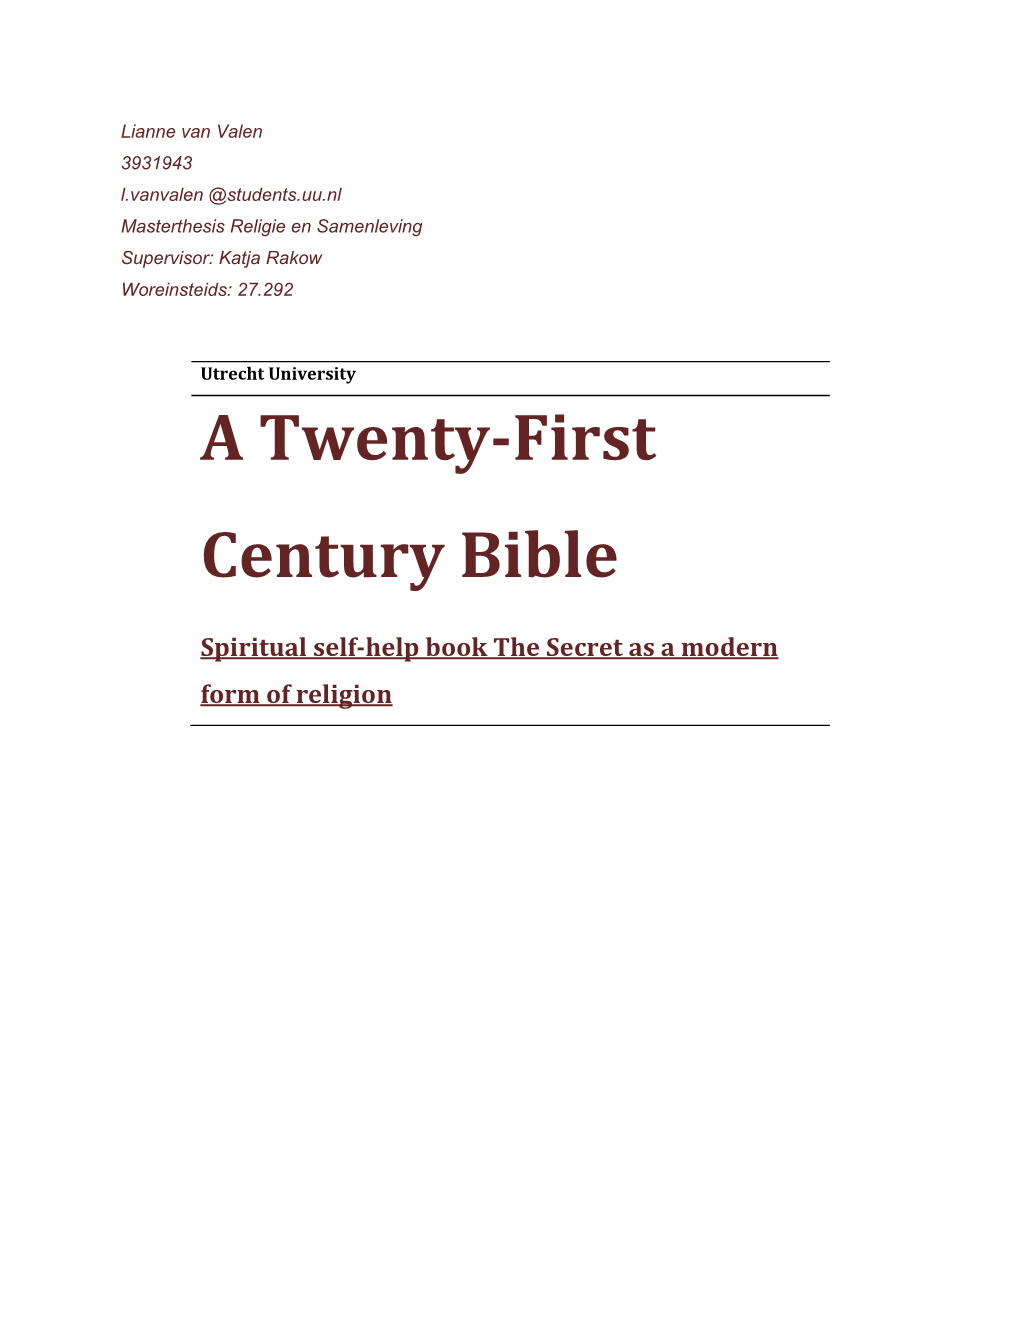 A Twenty-First Century Bible